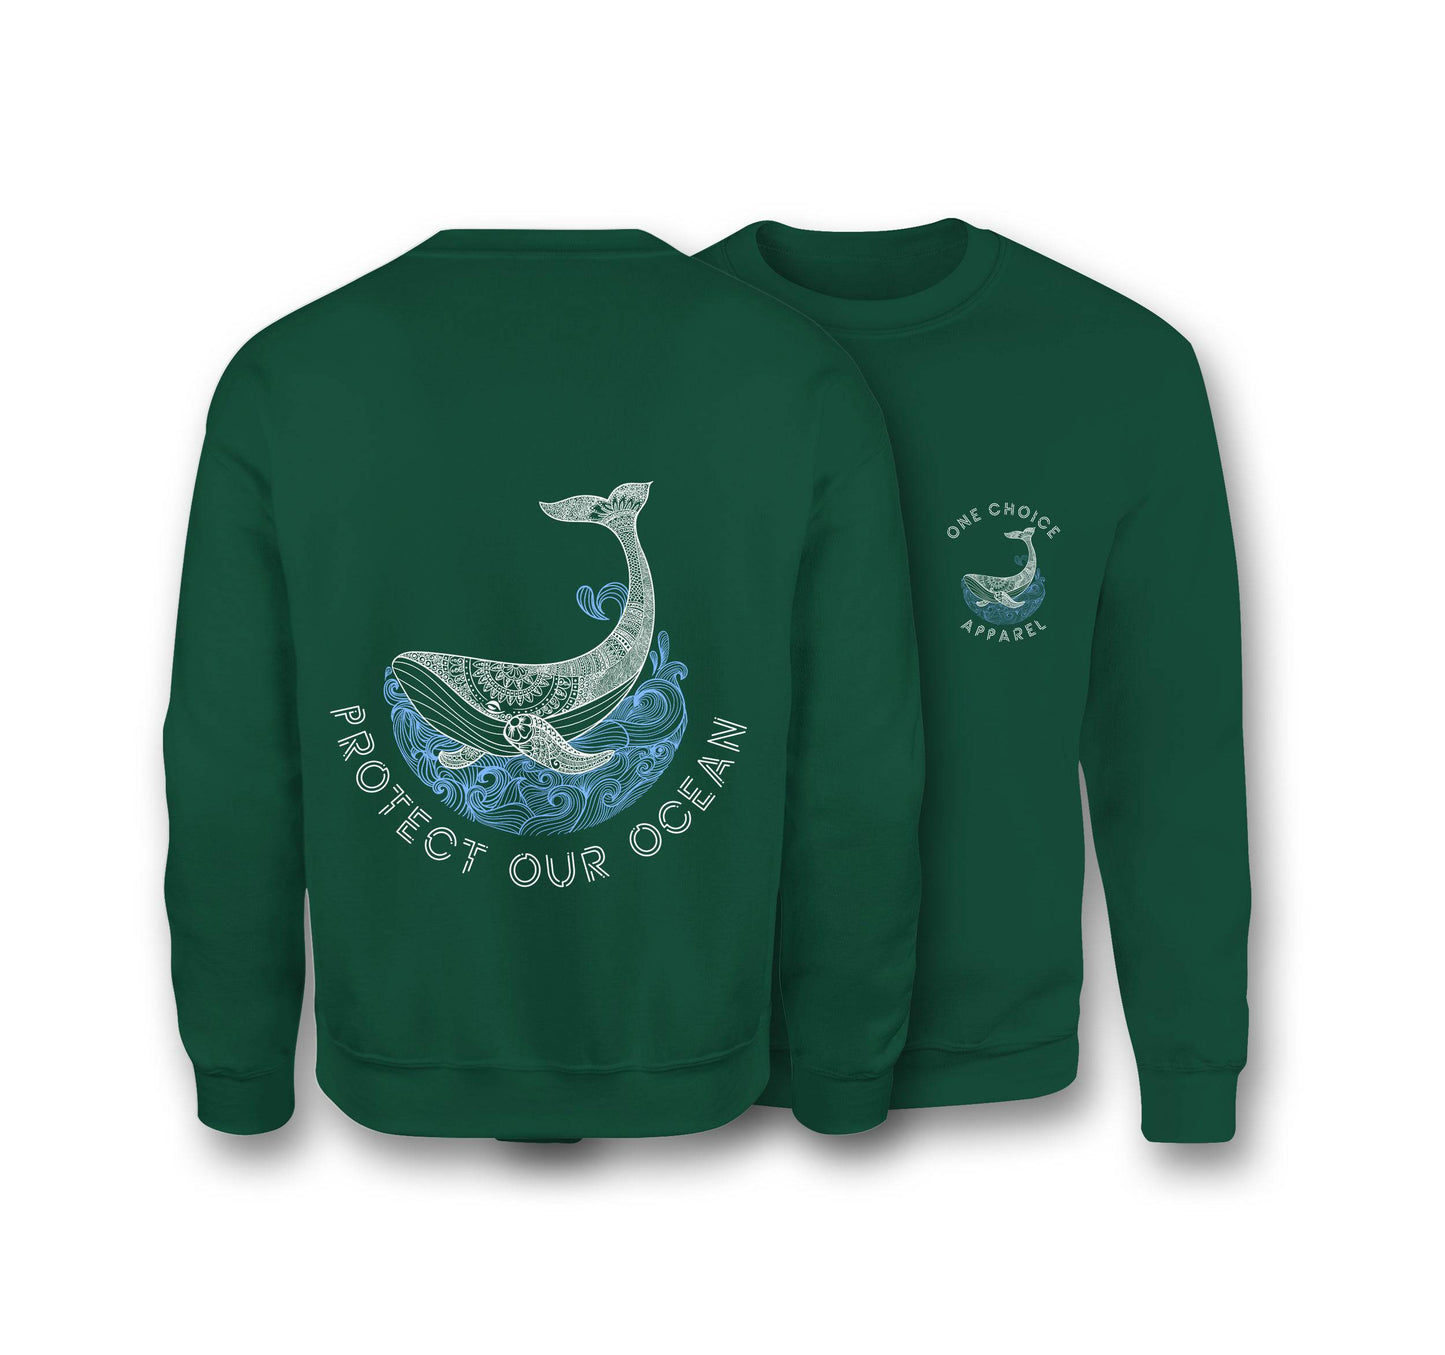 Protect Our Ocean Sweatshirt - Organic Cotton Sweatshirt - One Choice Apparel